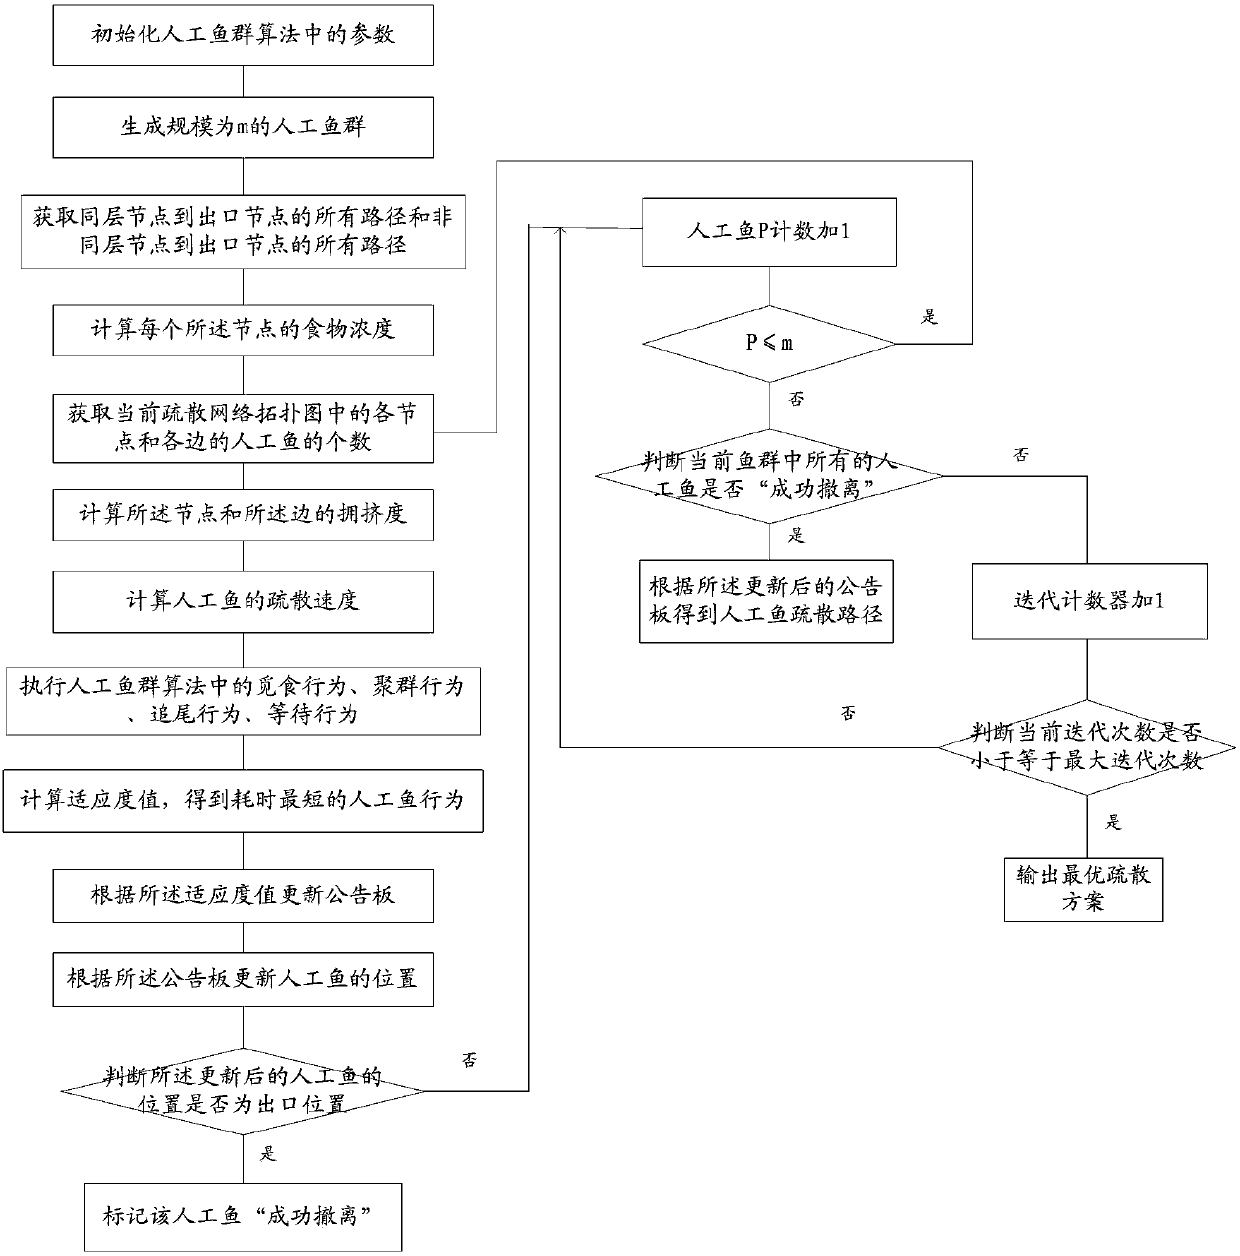 Hierarchical evacuation simulation optimization method based on artificial fish swarm algorithm